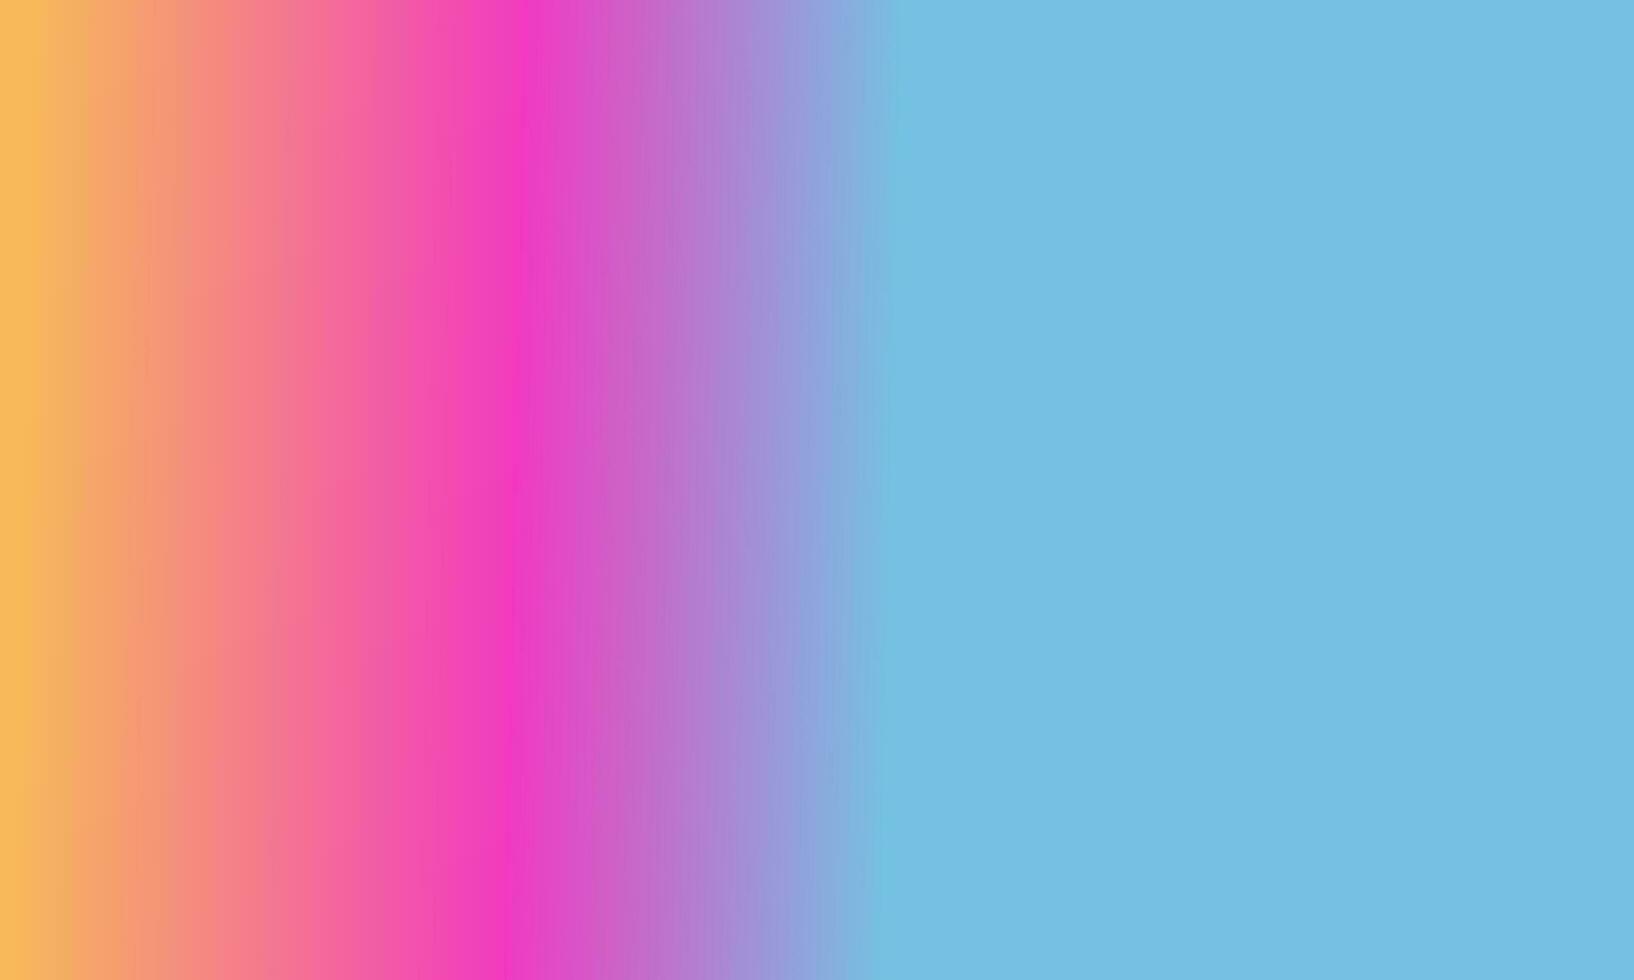 Design simple orange,blue and pink gradient color illustration background photo